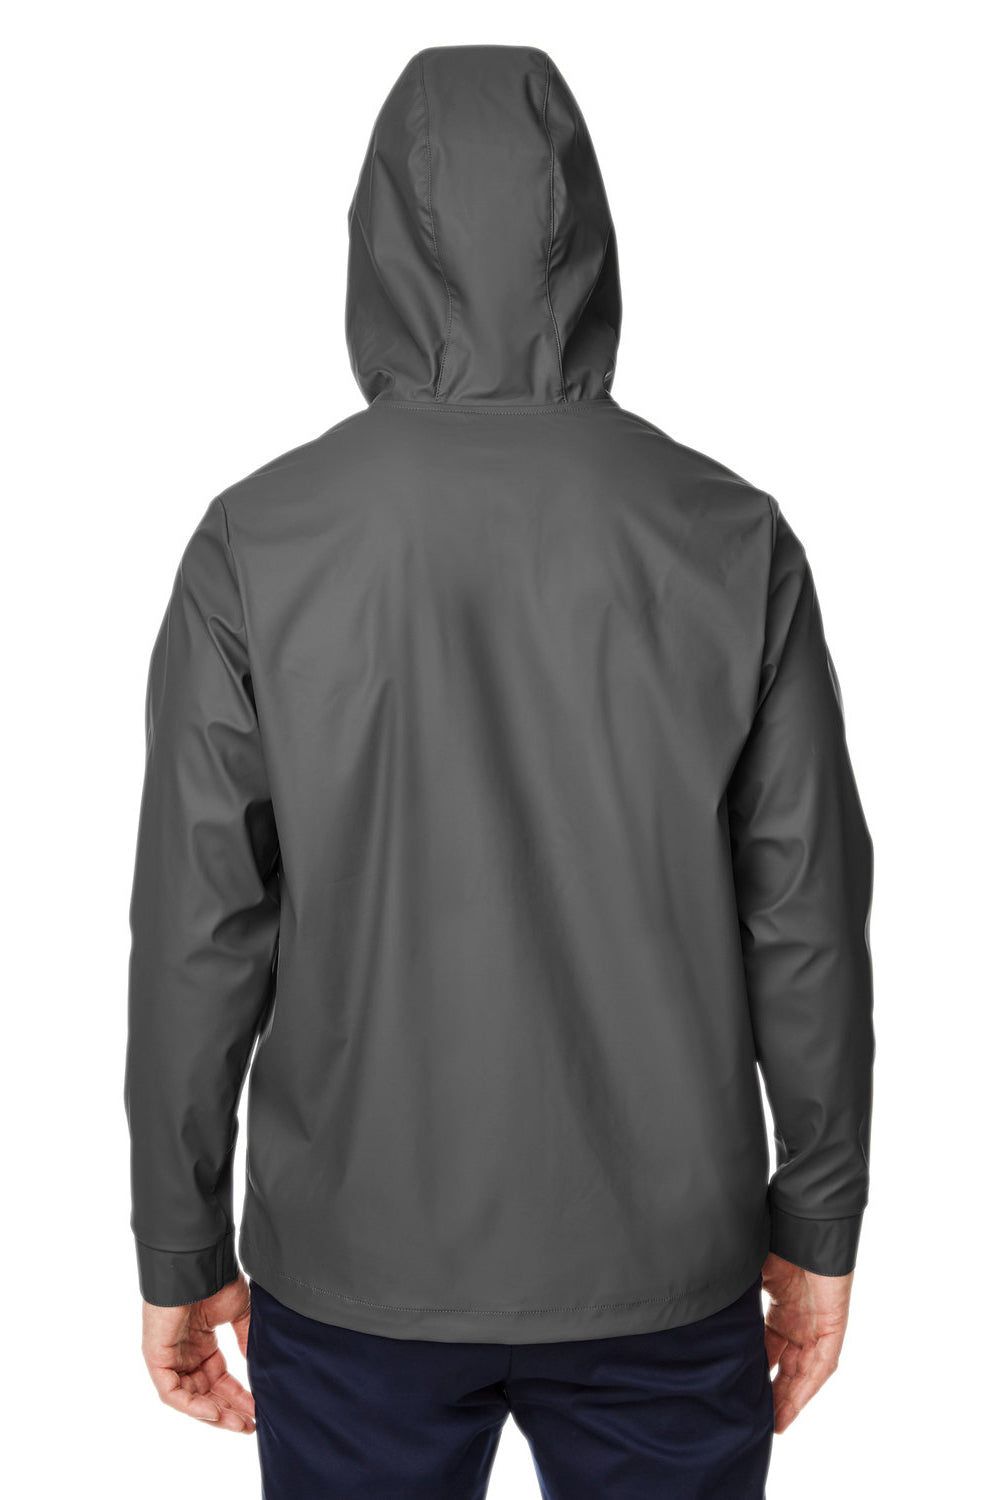 Devon & Jones DG720 Mens New Classics Prescott Full Zip Hooded Rain Jacket Graphite Grey Back